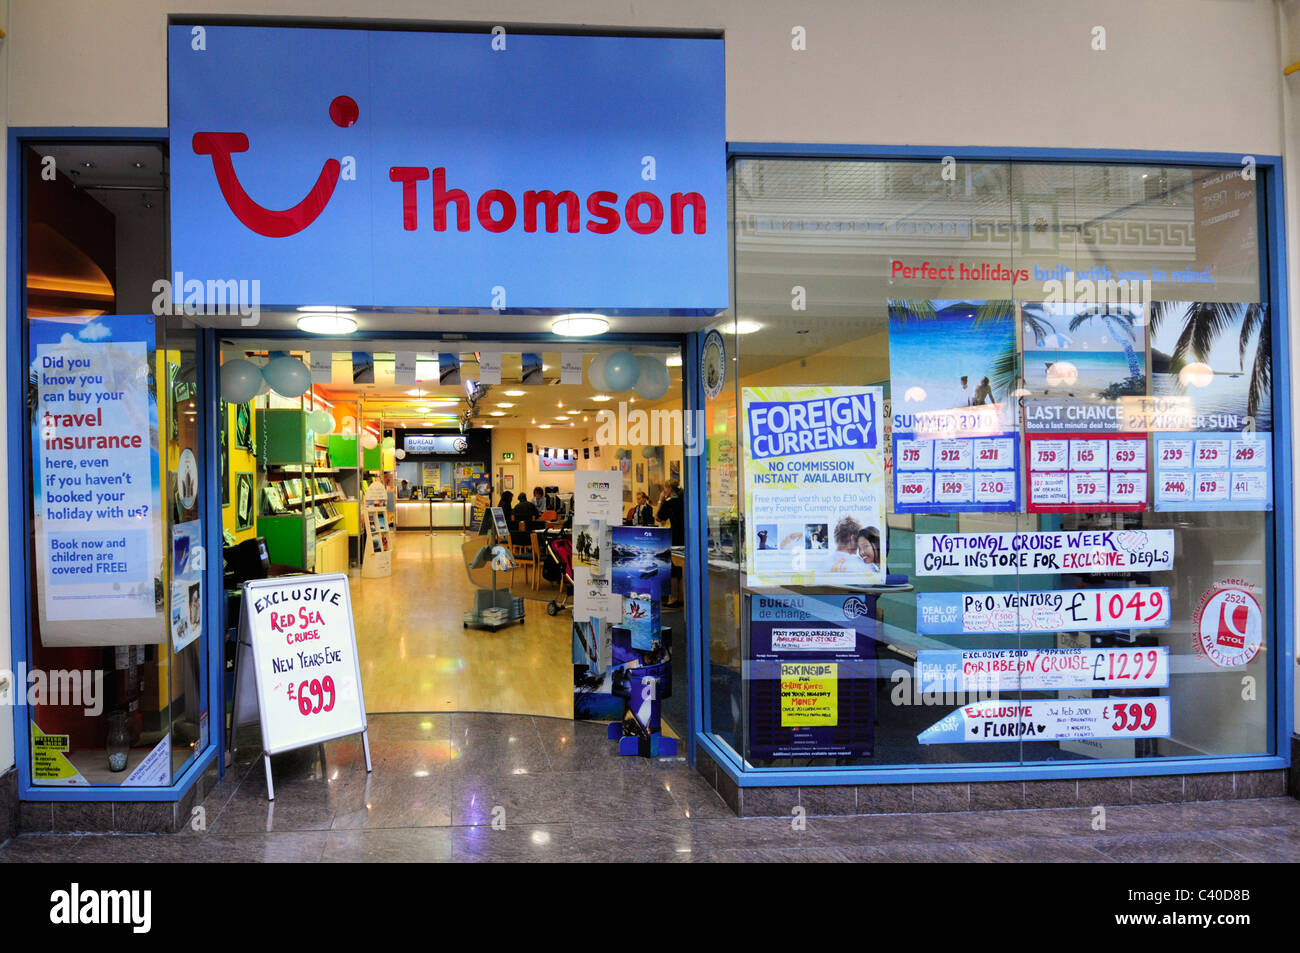 thomson travel agent holiday bargain Stock Photo